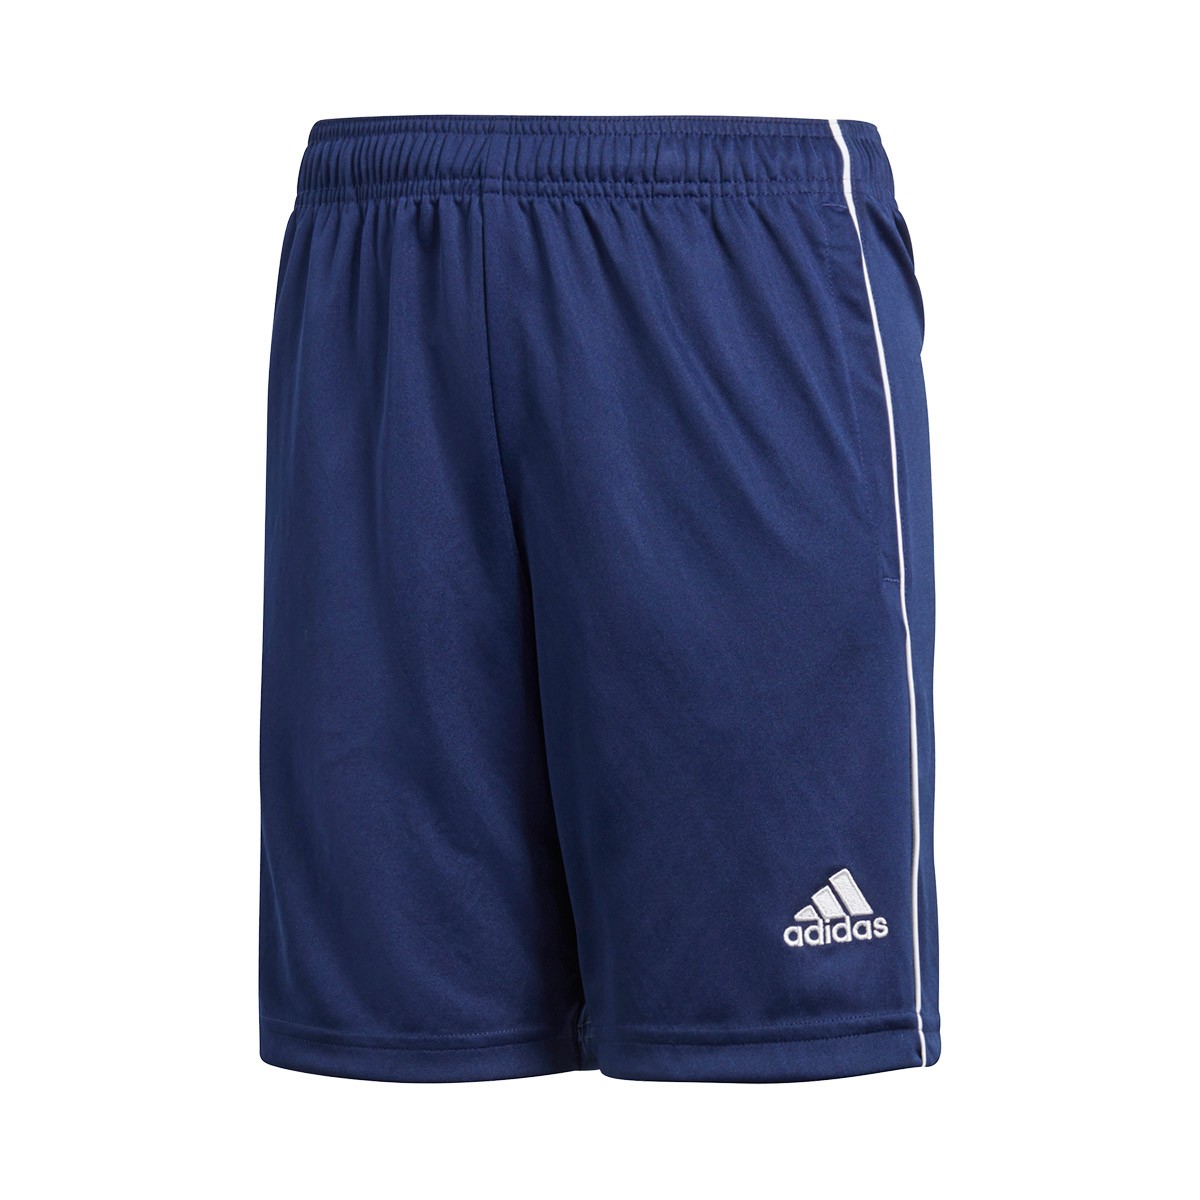 adidas core 18 shorts